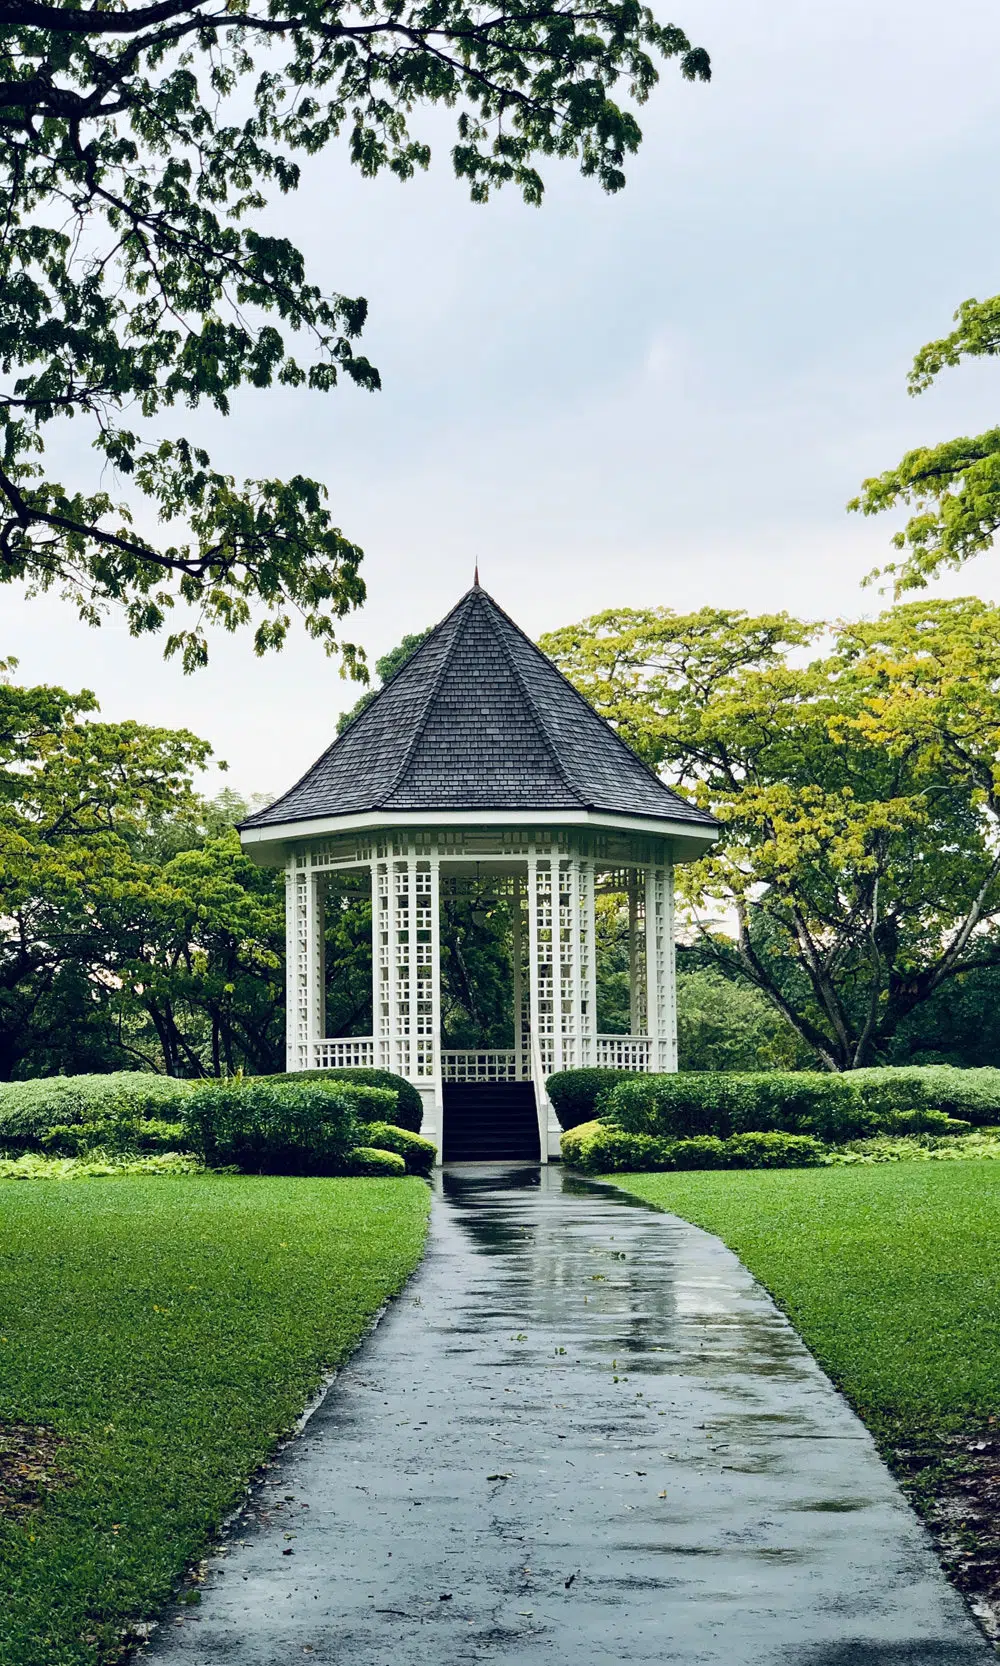 Pavilion at the Singapore Botanic Gardens. Photo: Samson Thomas / Unsplash